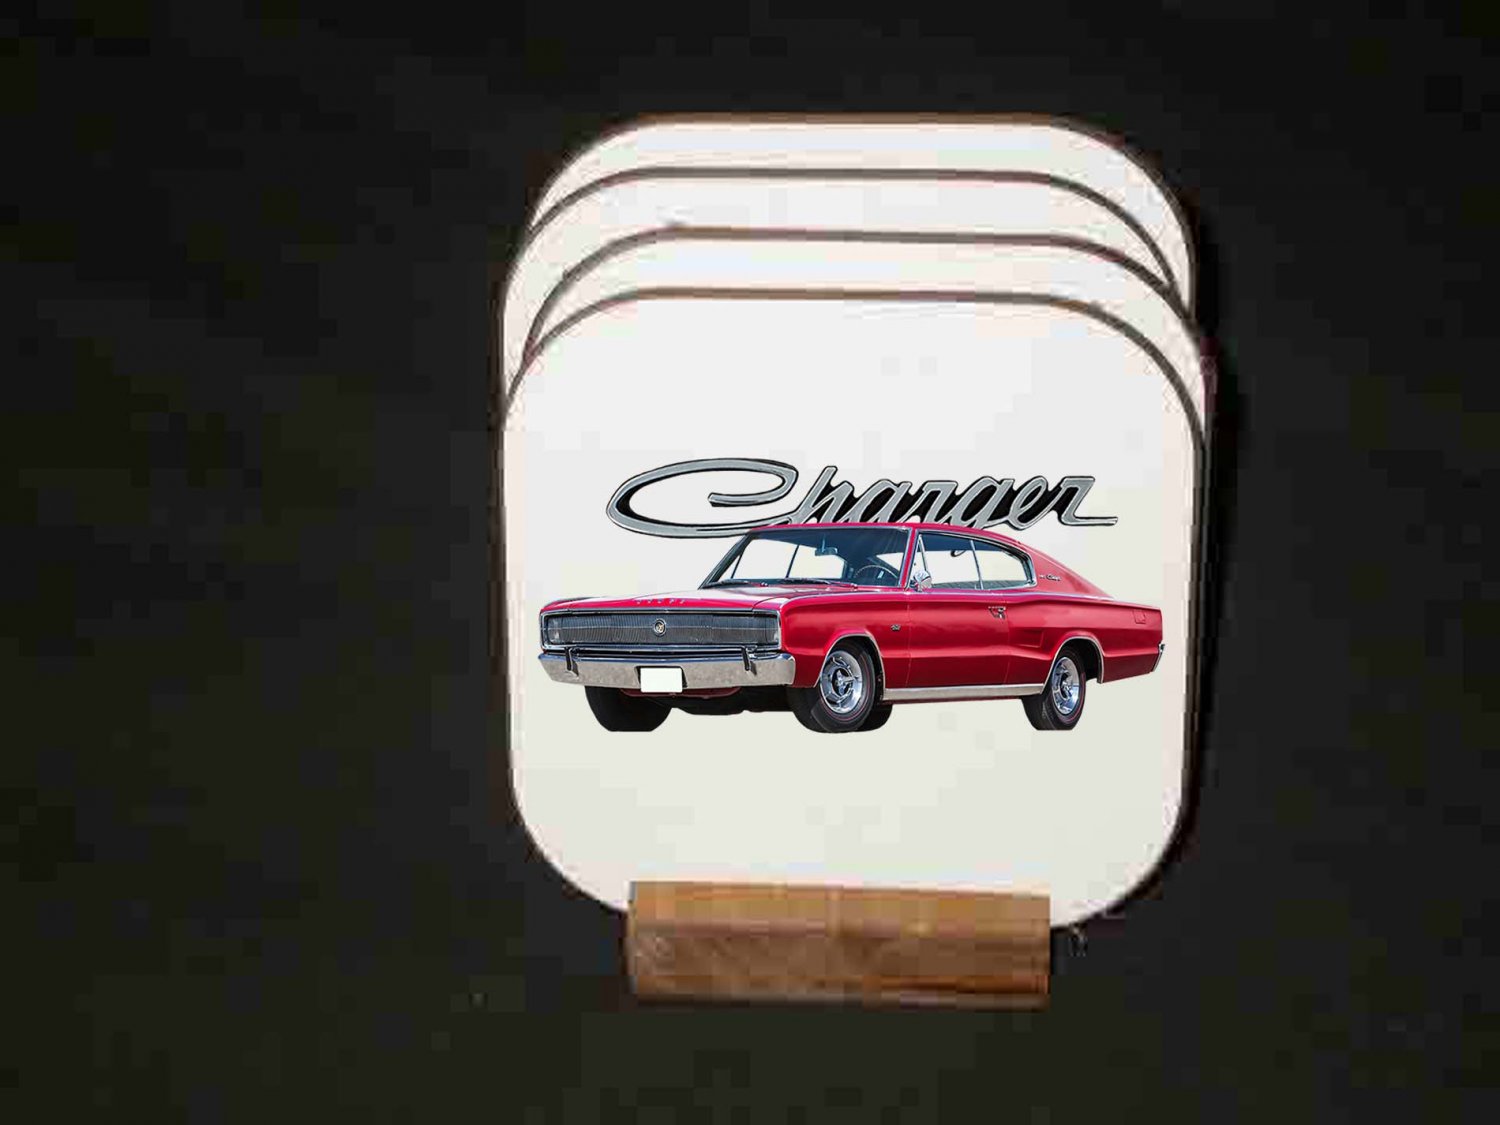 Beautiful 1966 Dodge Charger Hard Coaster set!